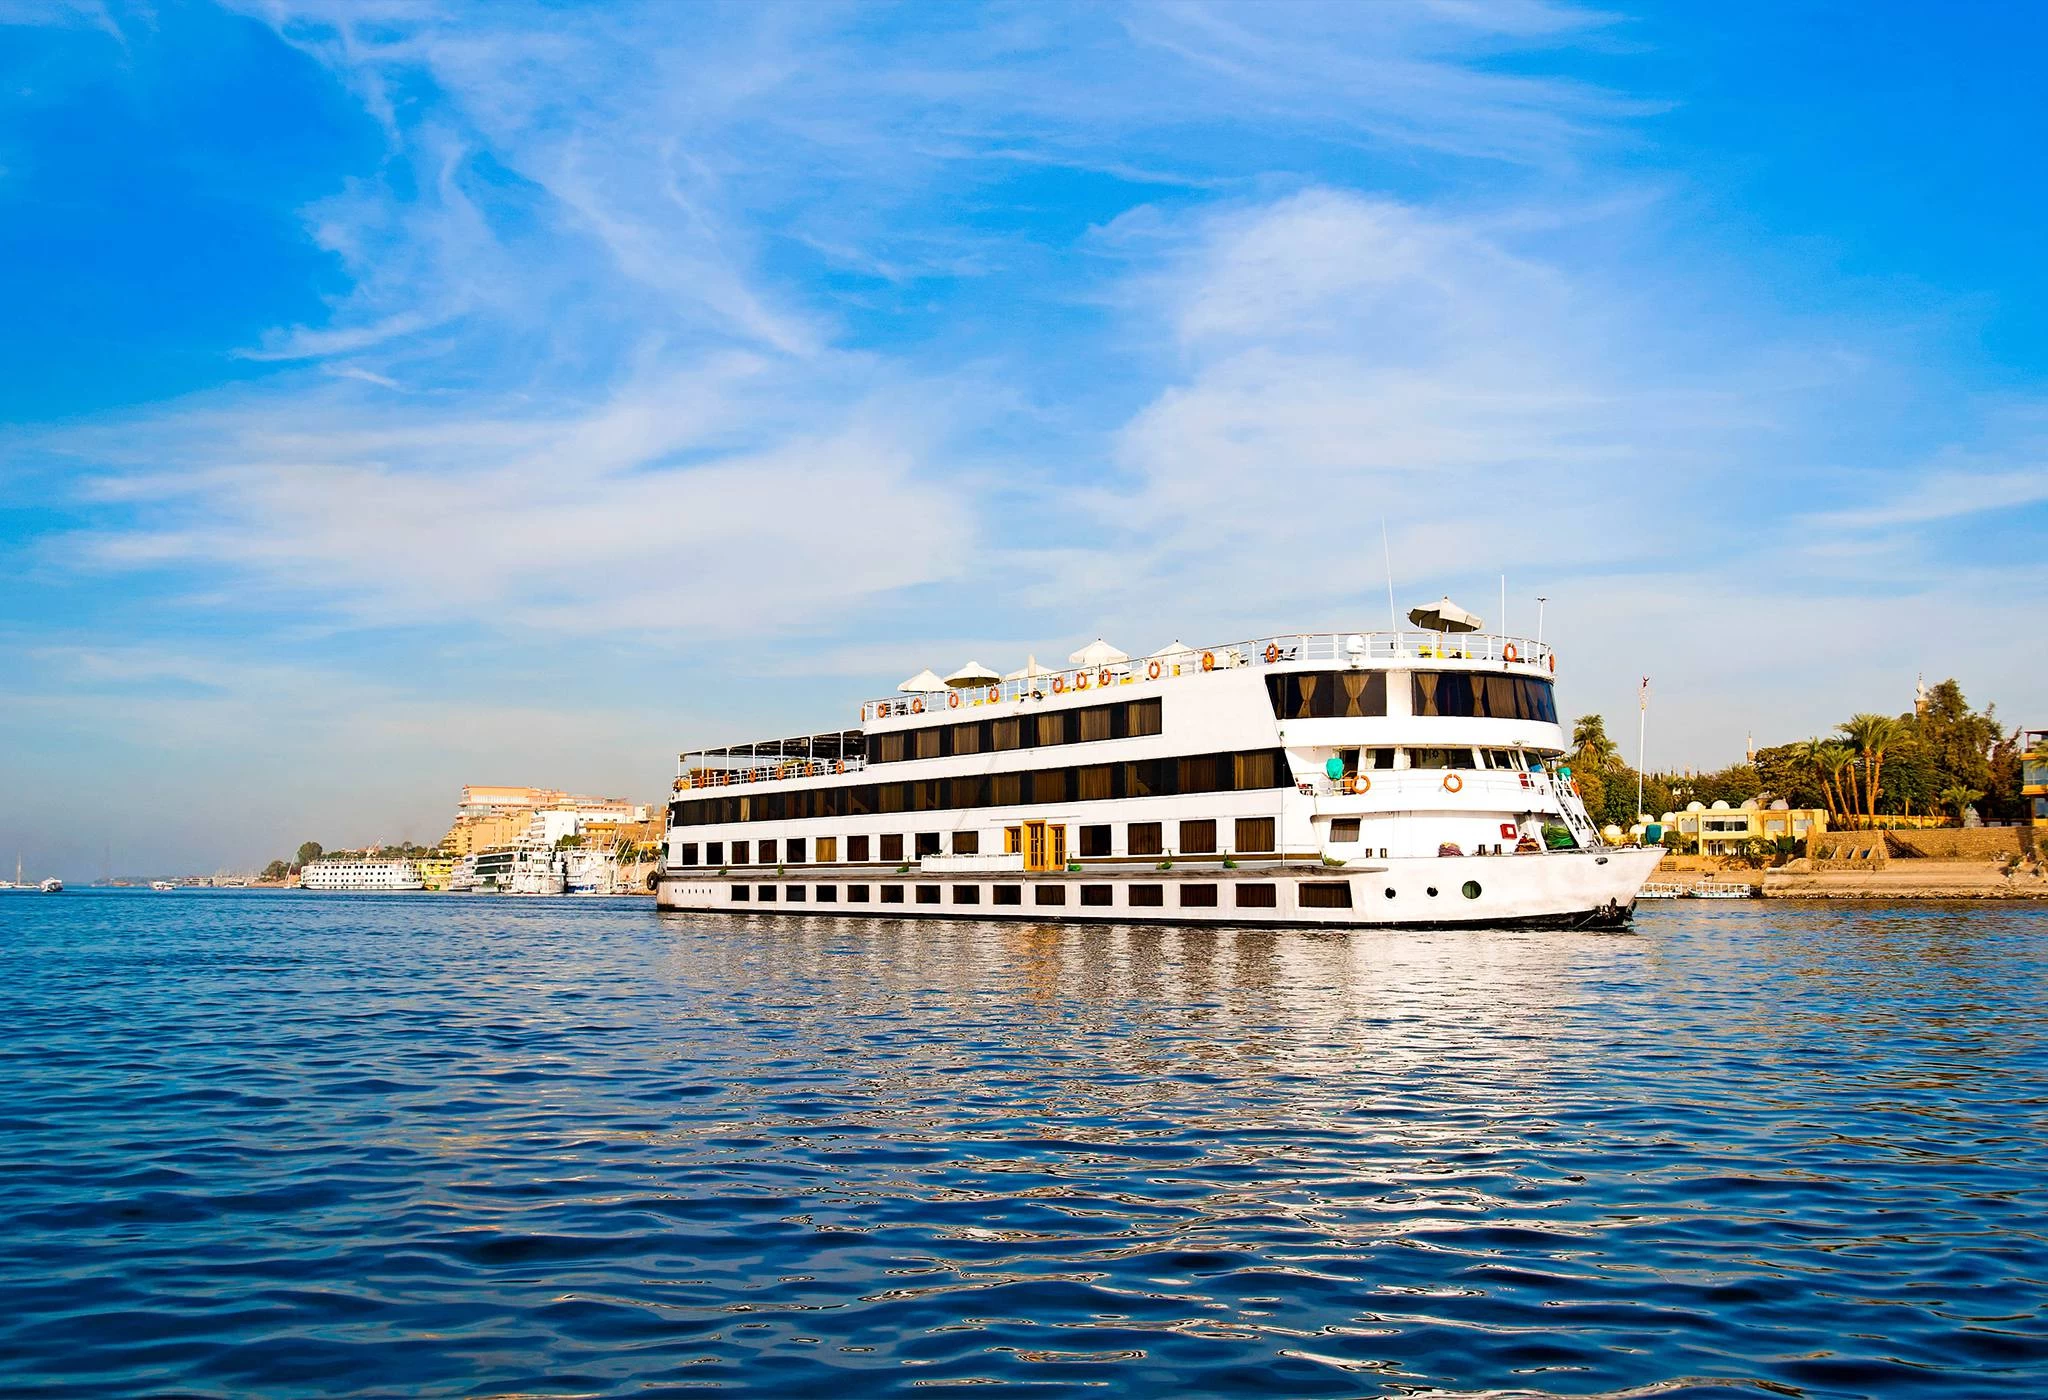 Egypt Nile Cruise Tours